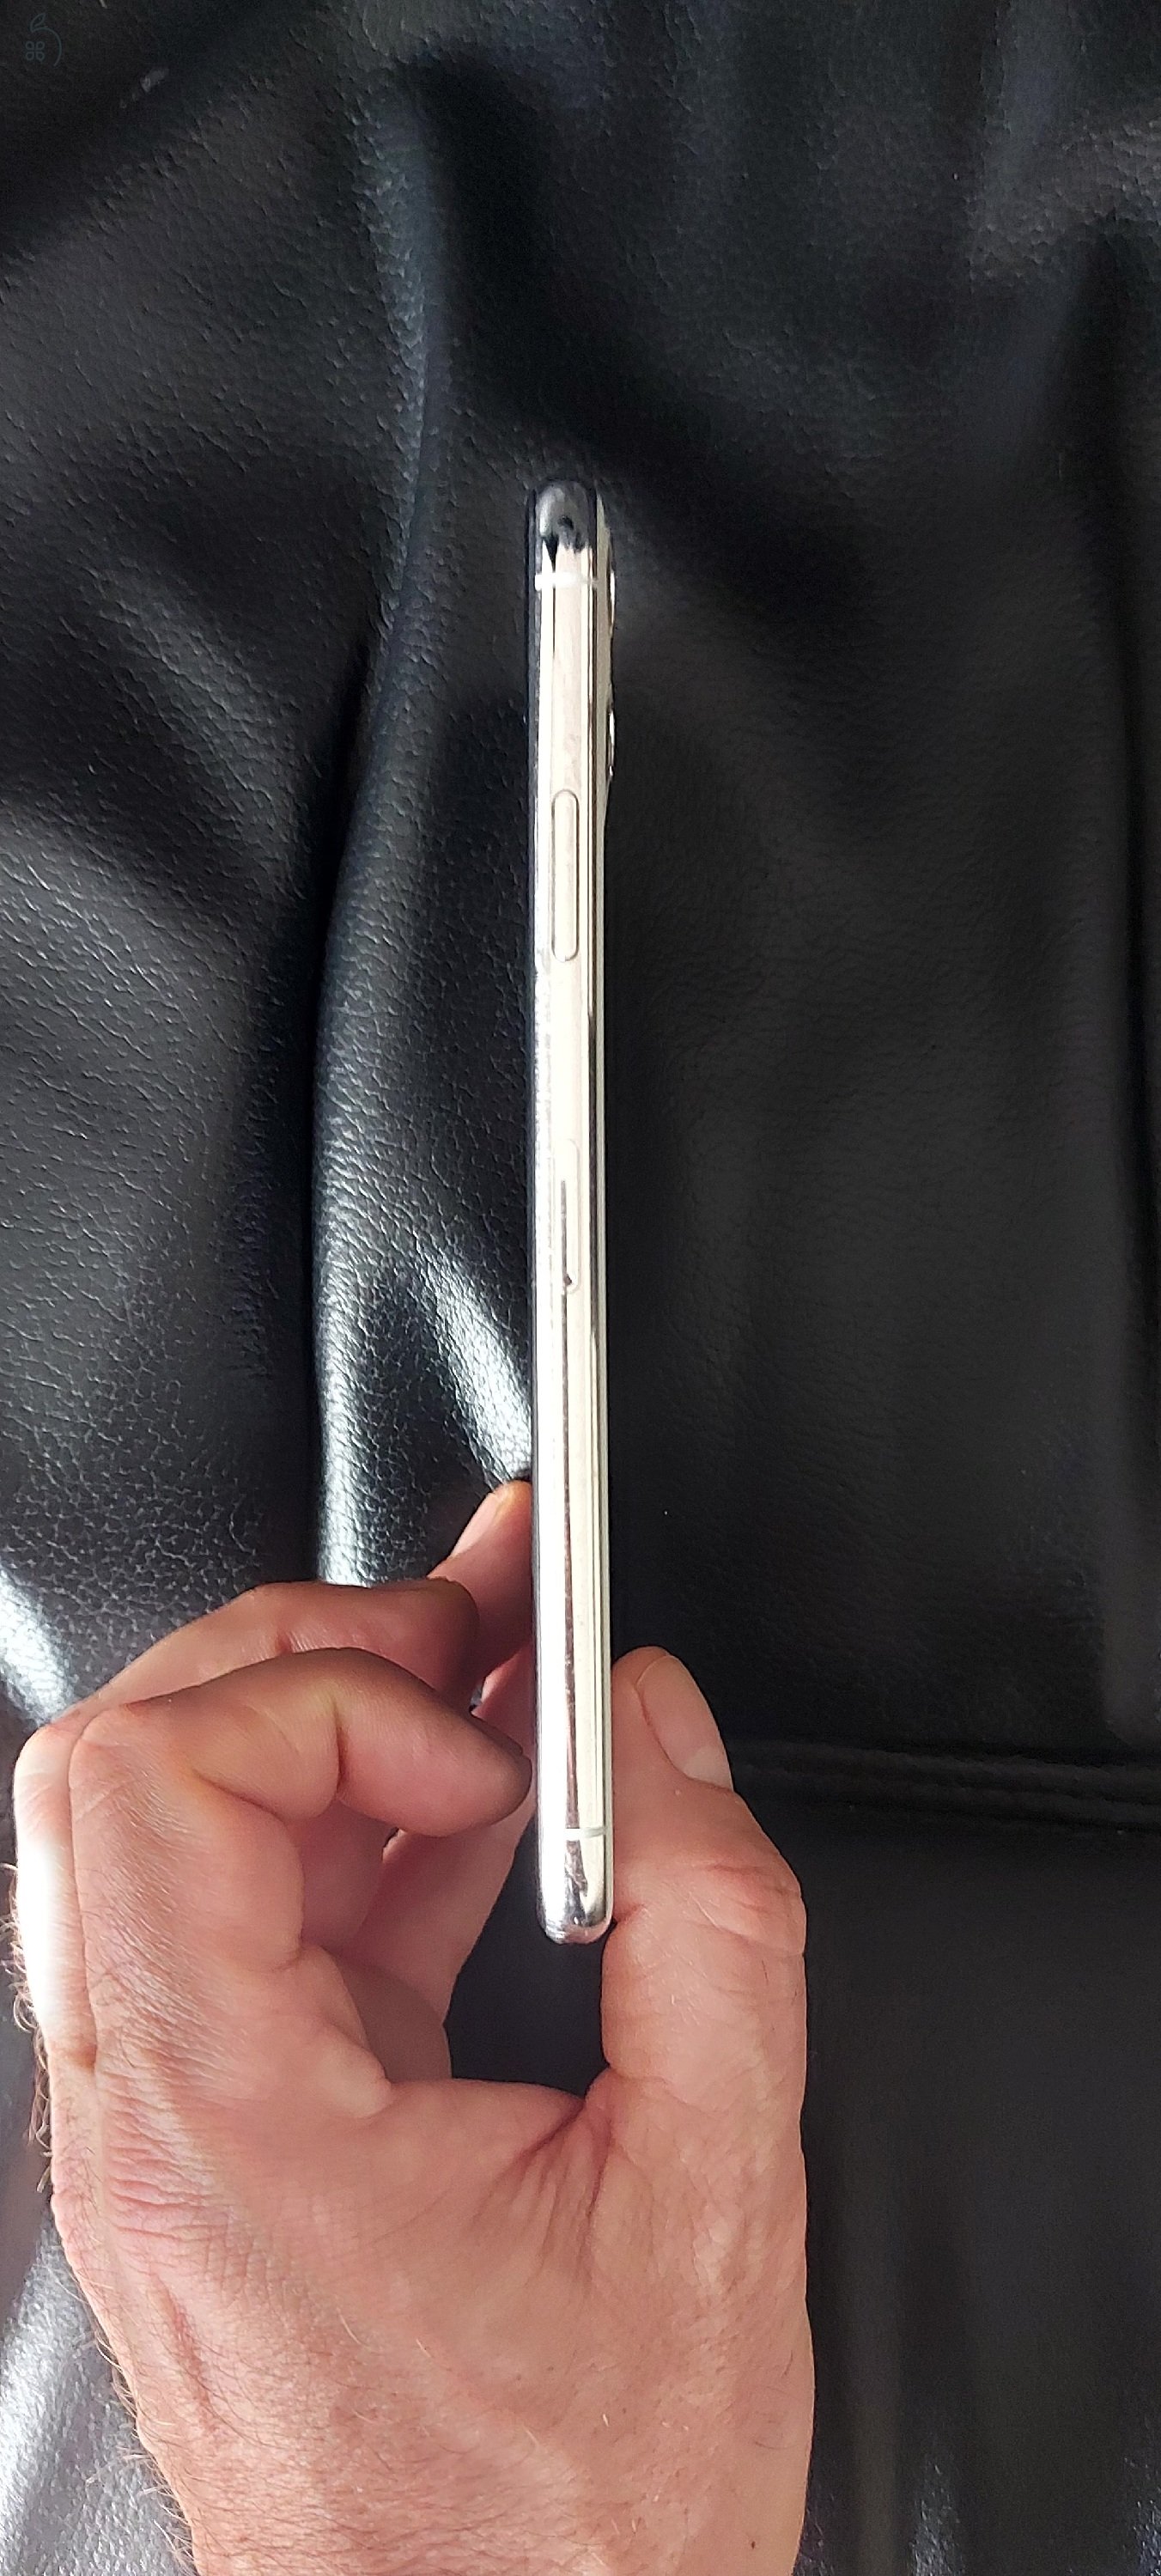 Iphone 11 Pro Max - 64 GB -Független-Újszerű